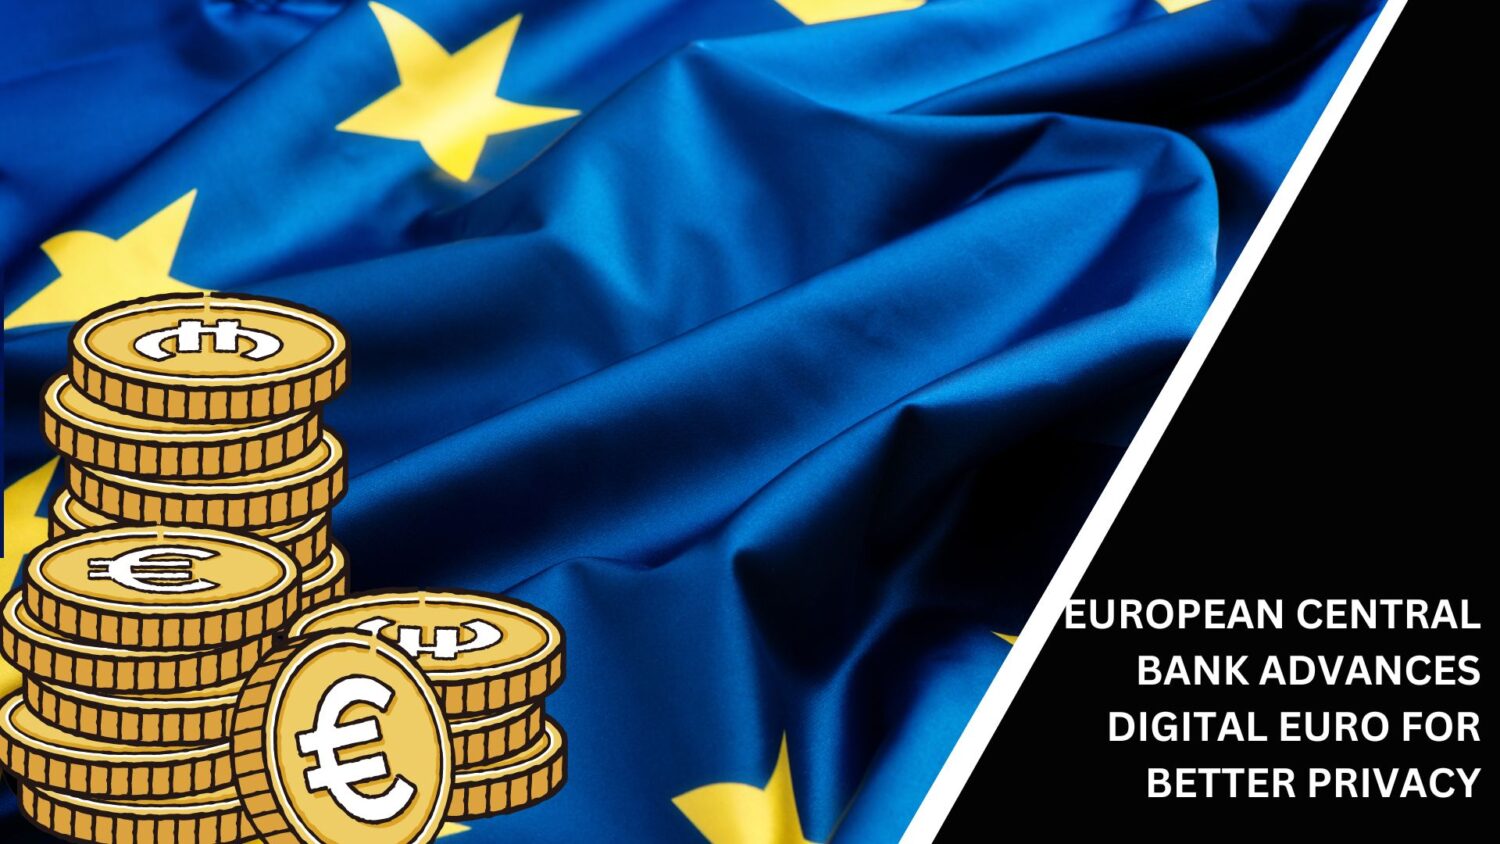 European Central Bank Advances Digital Euro For Better Privacy